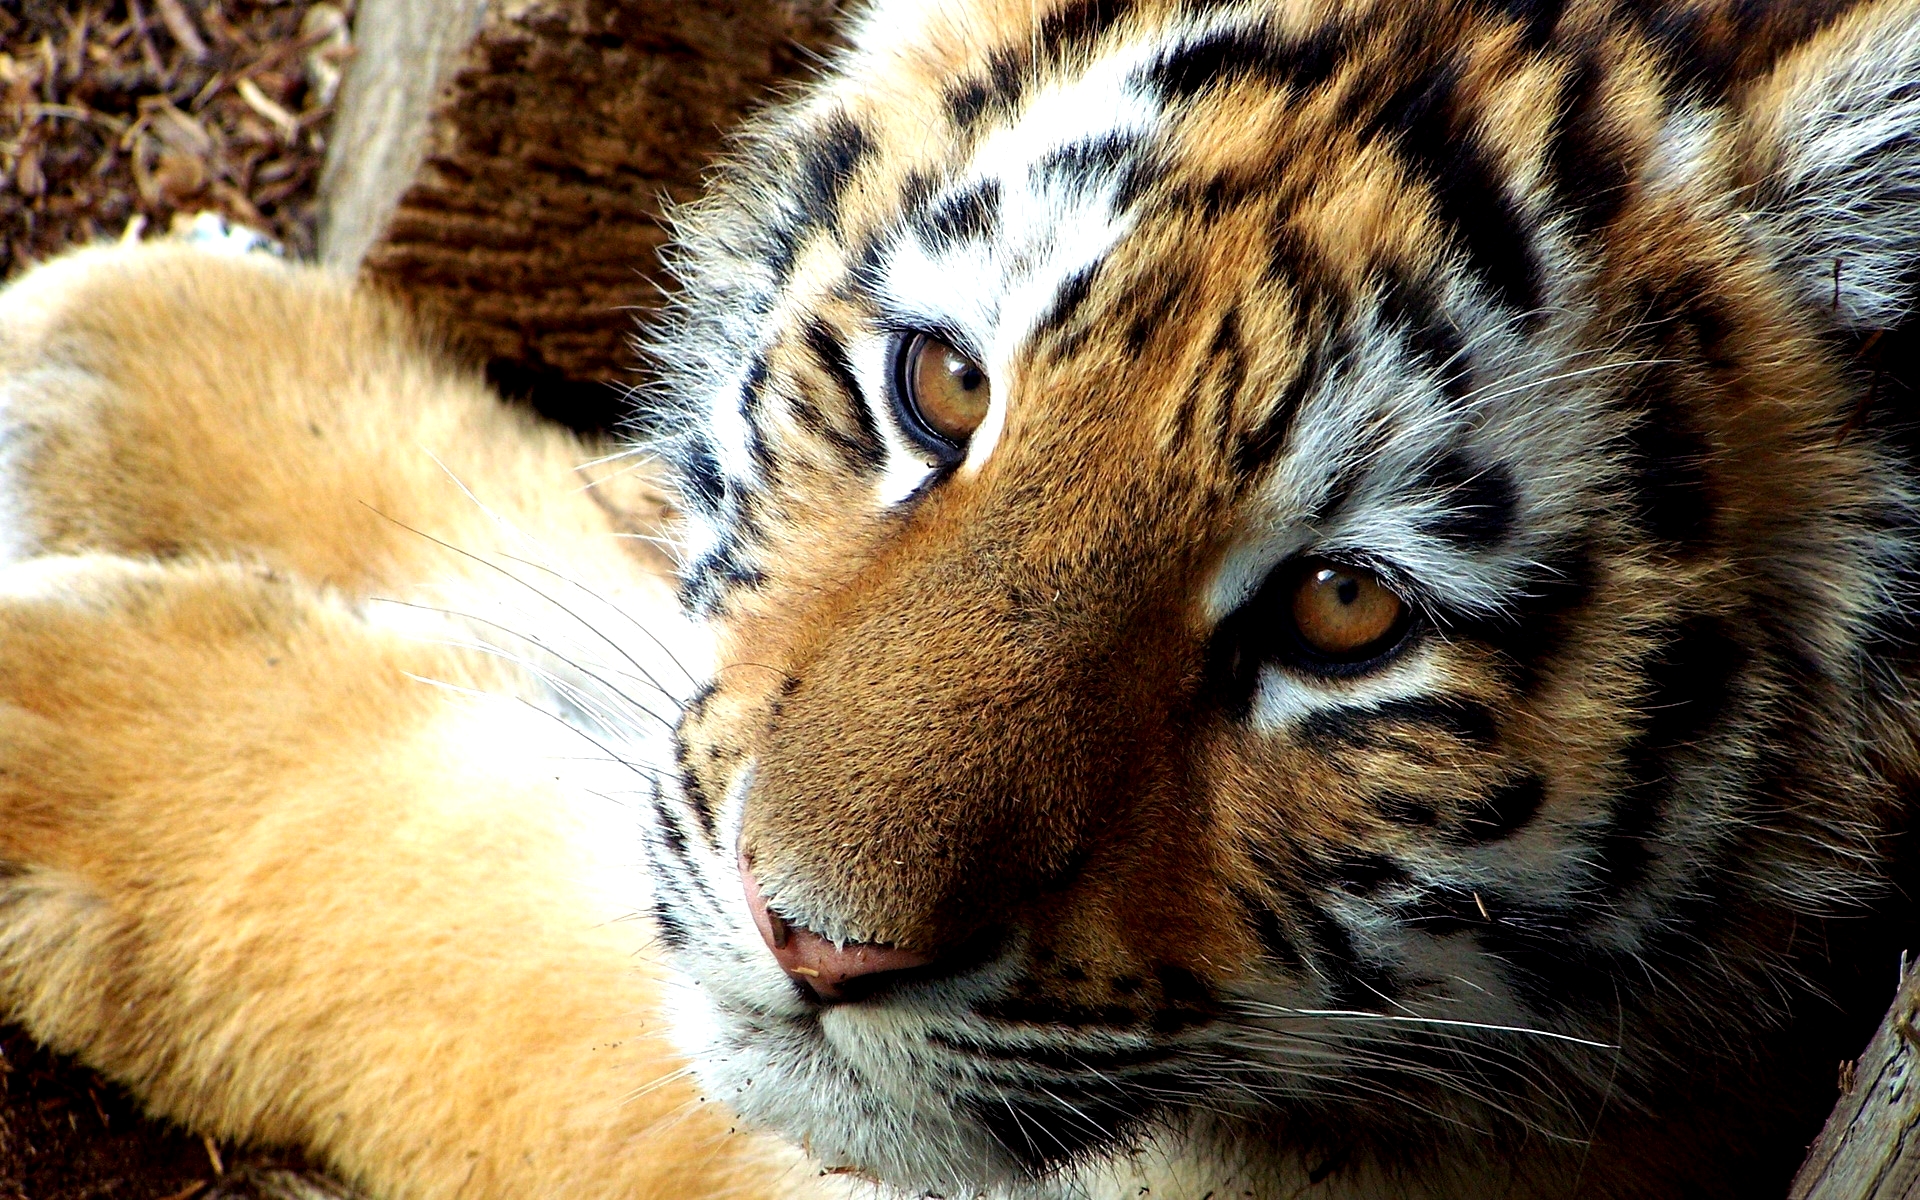 173942 descargar imagen animales, tigre, bozal, gatos: fondos de pantalla y protectores de pantalla gratis